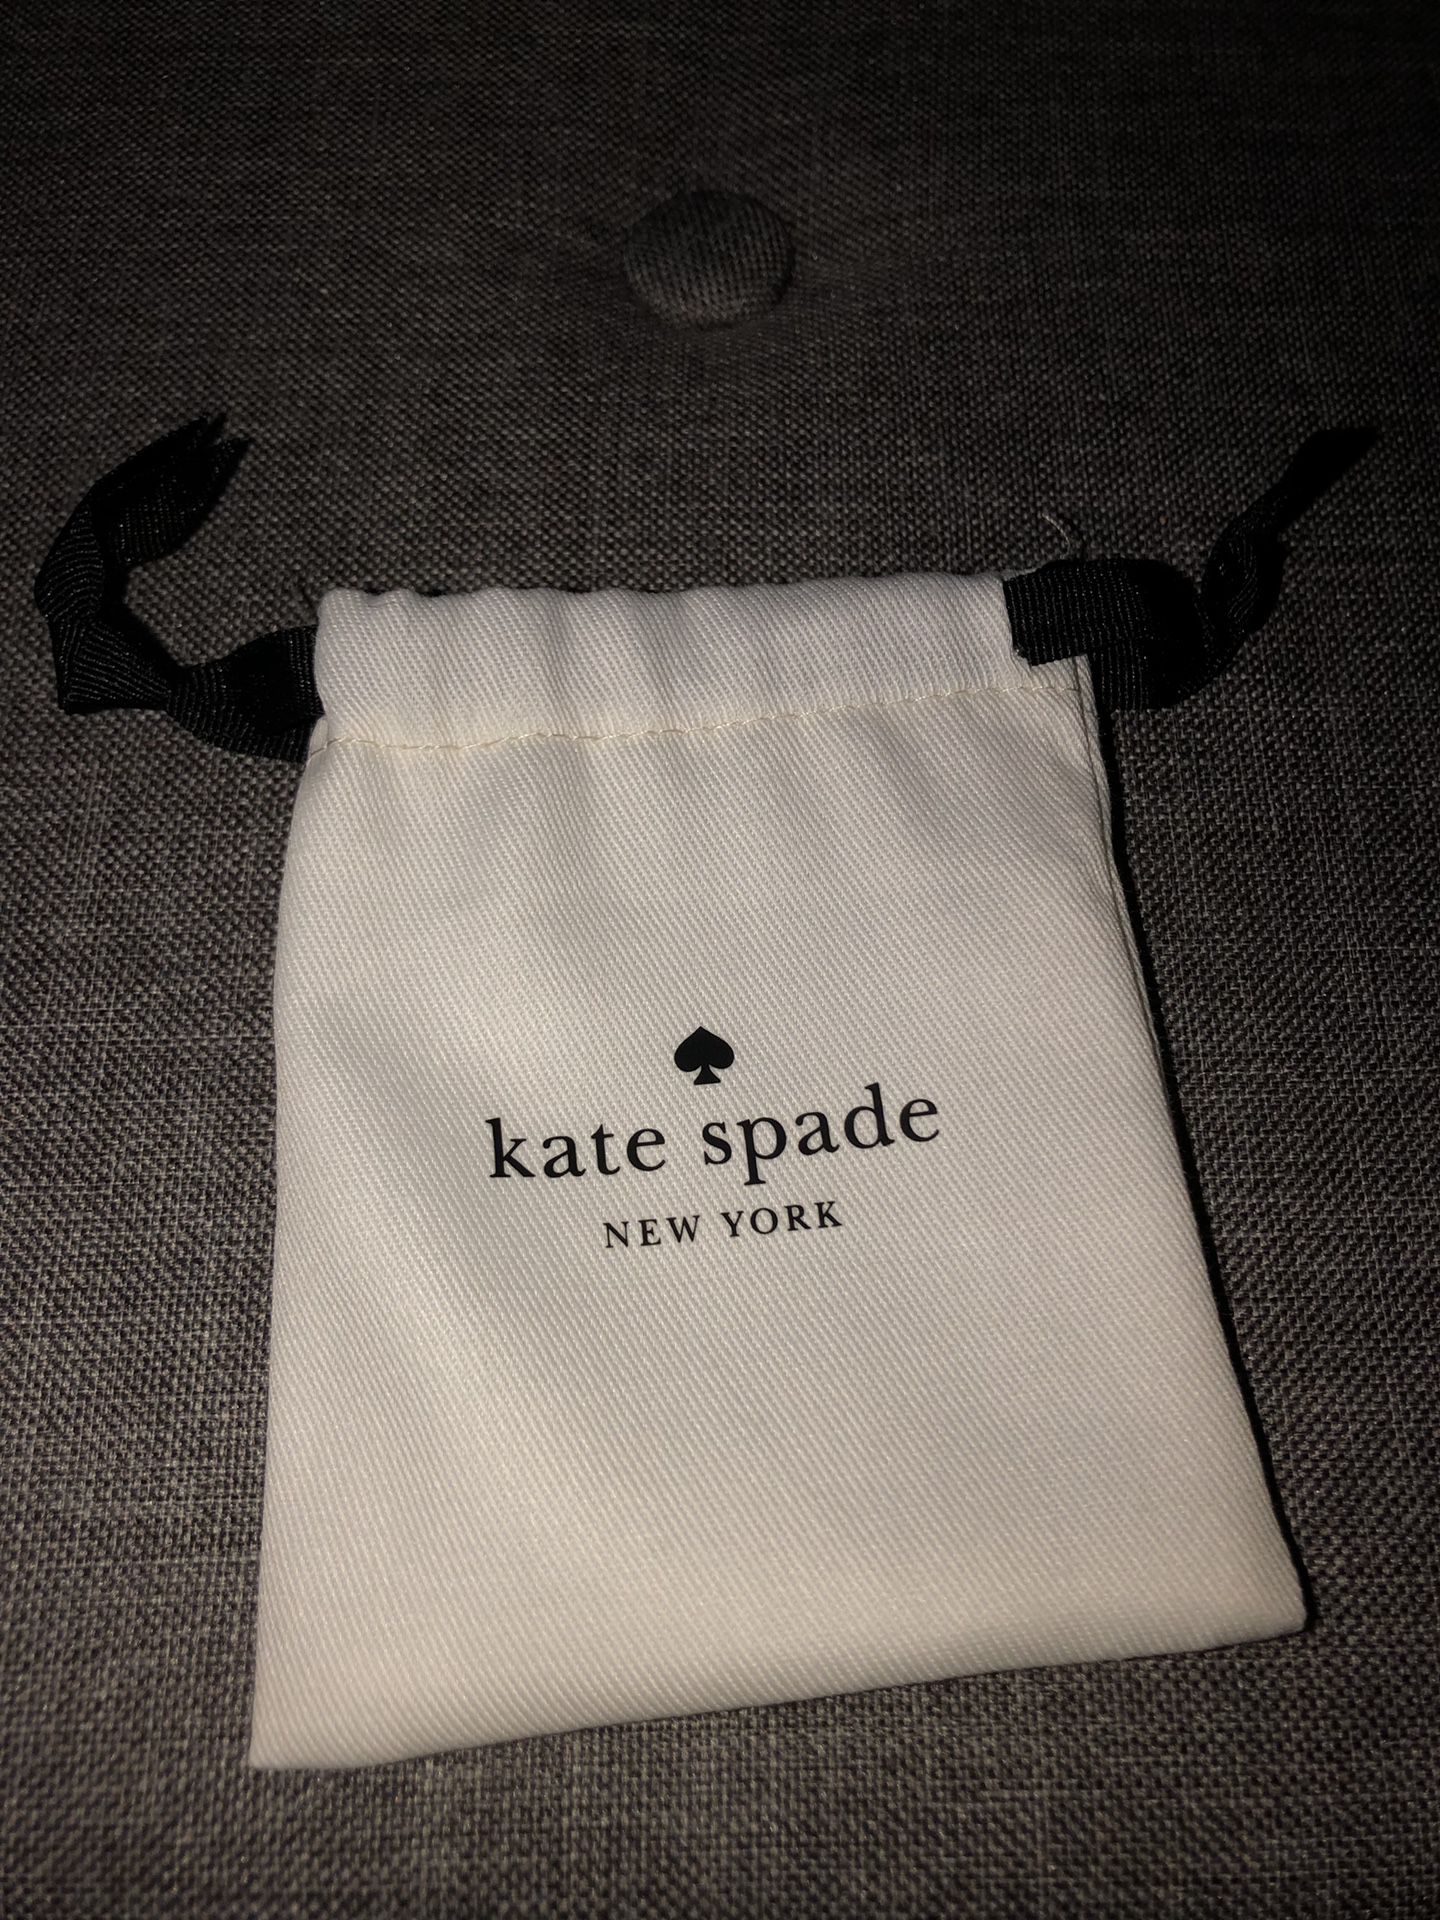 Kate Spade Jewelry Bag